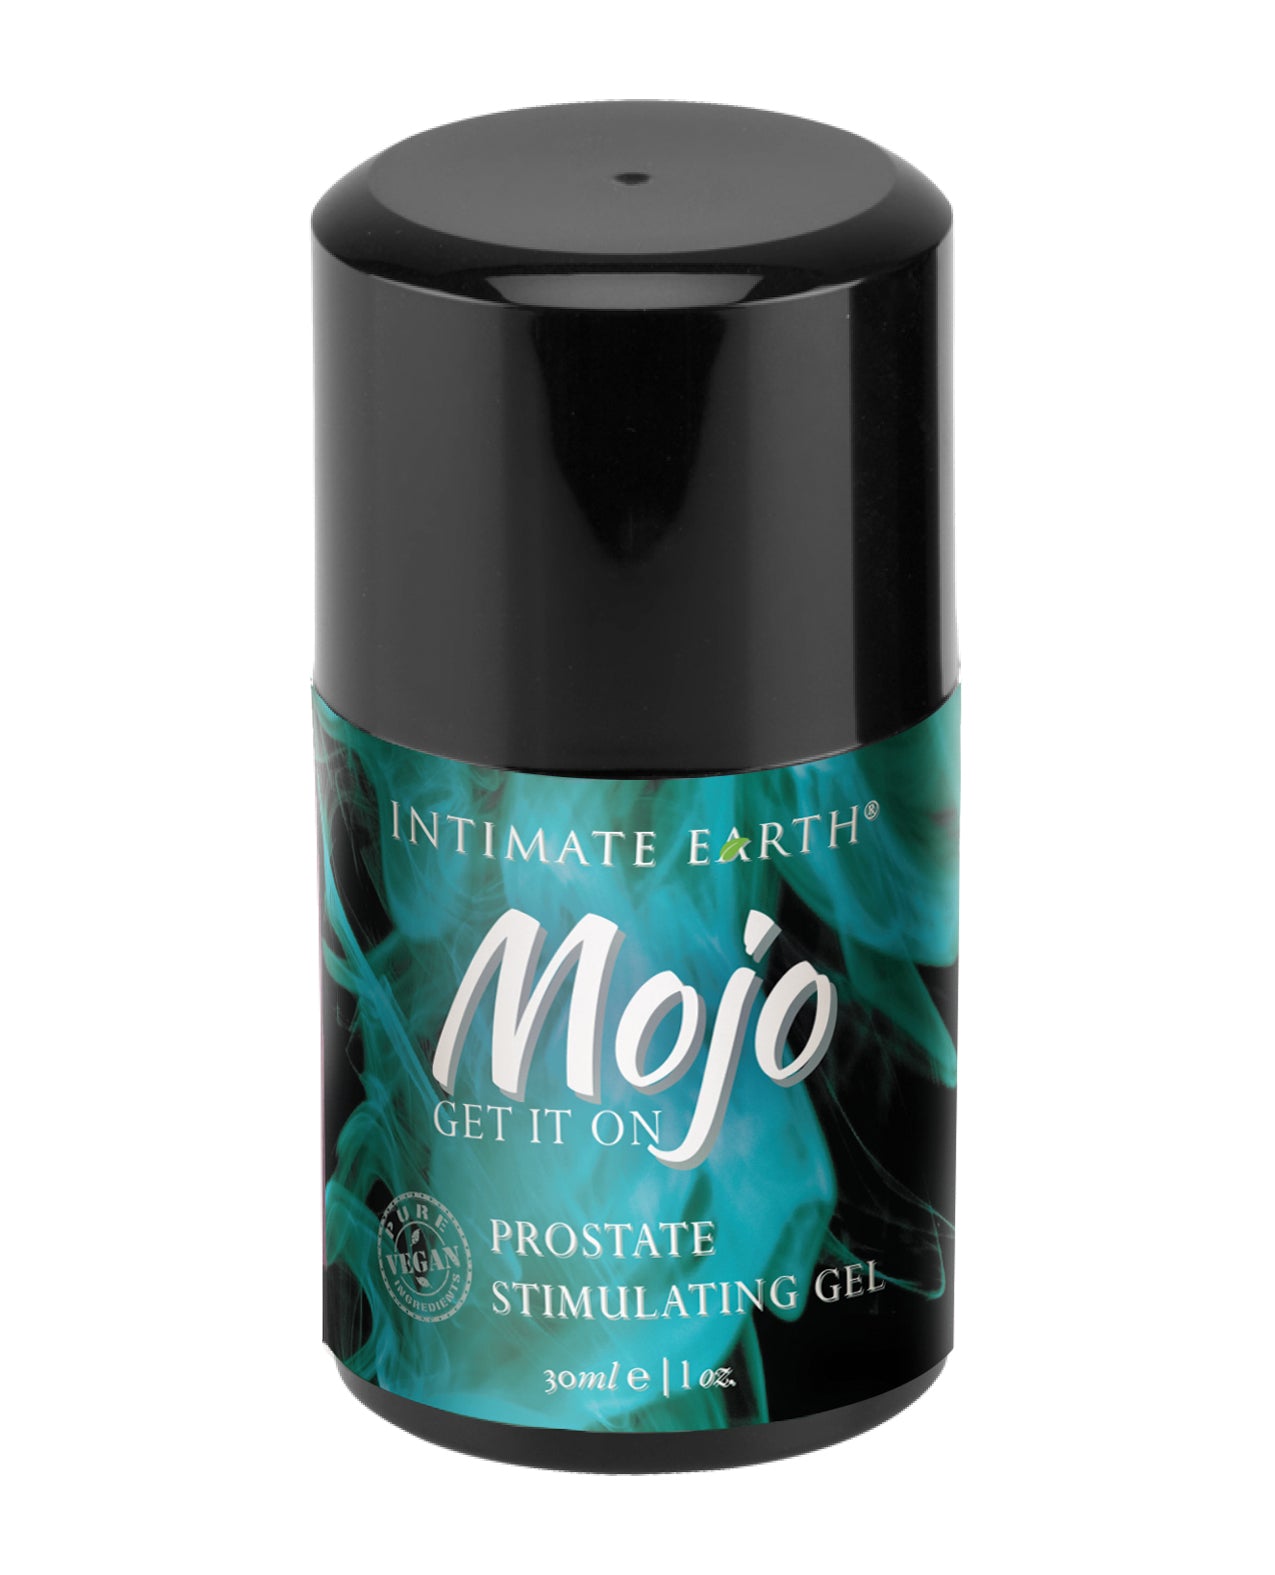 Intimate Earth Mojo Prostate Stimulating Gel